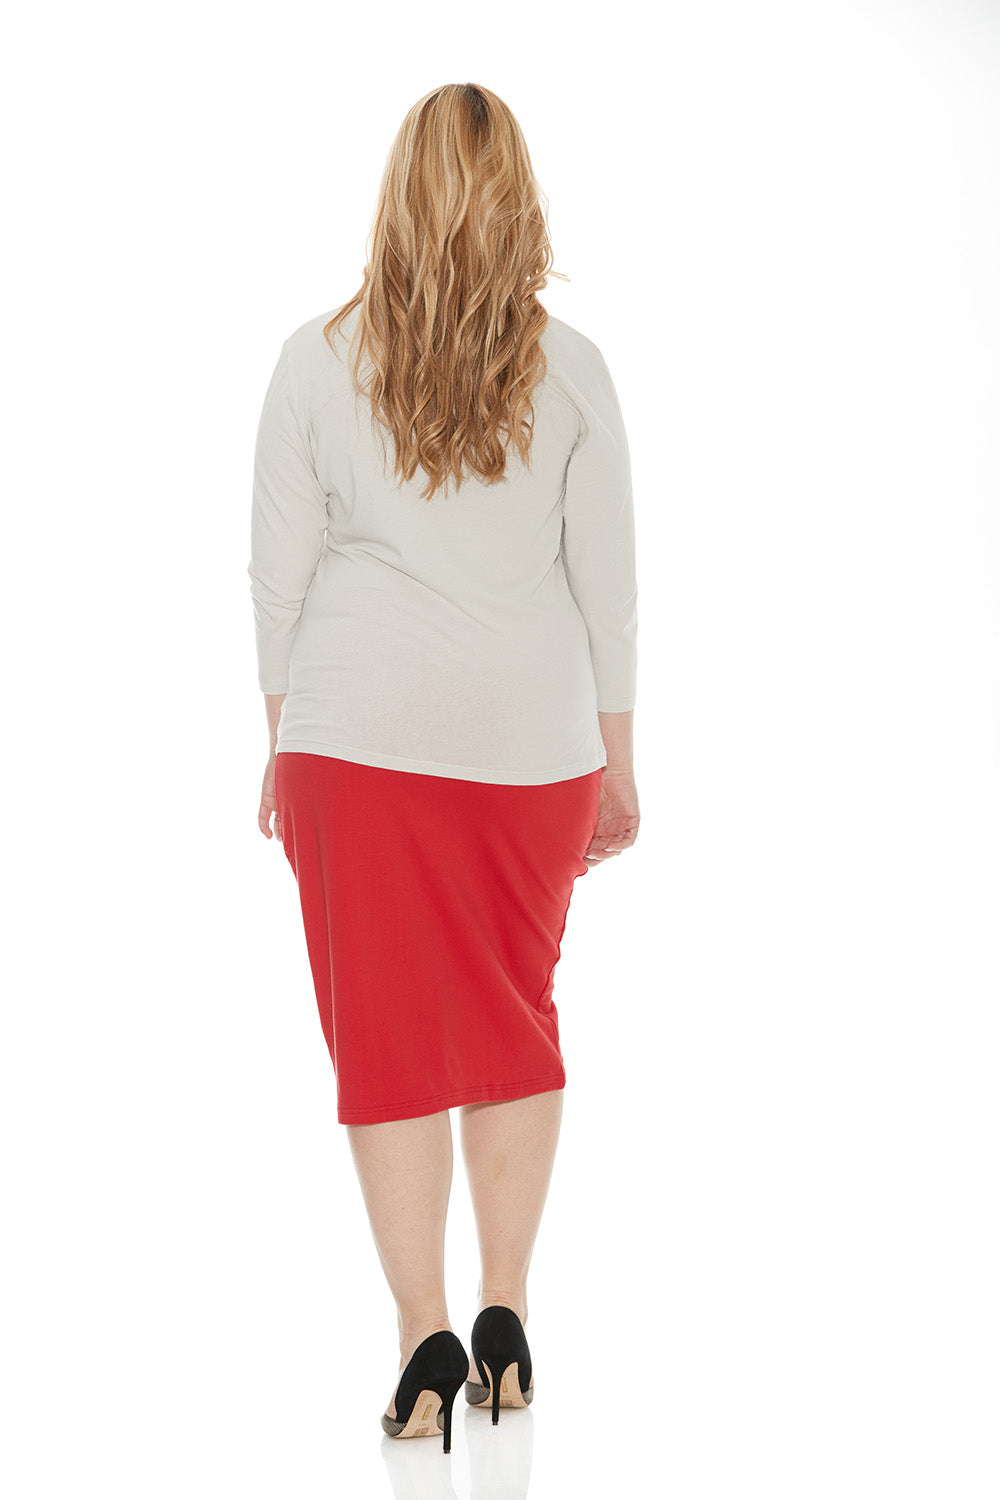 Esteez DALLAS Skirt - PLUS SIZE Cotton Spandex Stretchy Pencil skirt for WOMEN